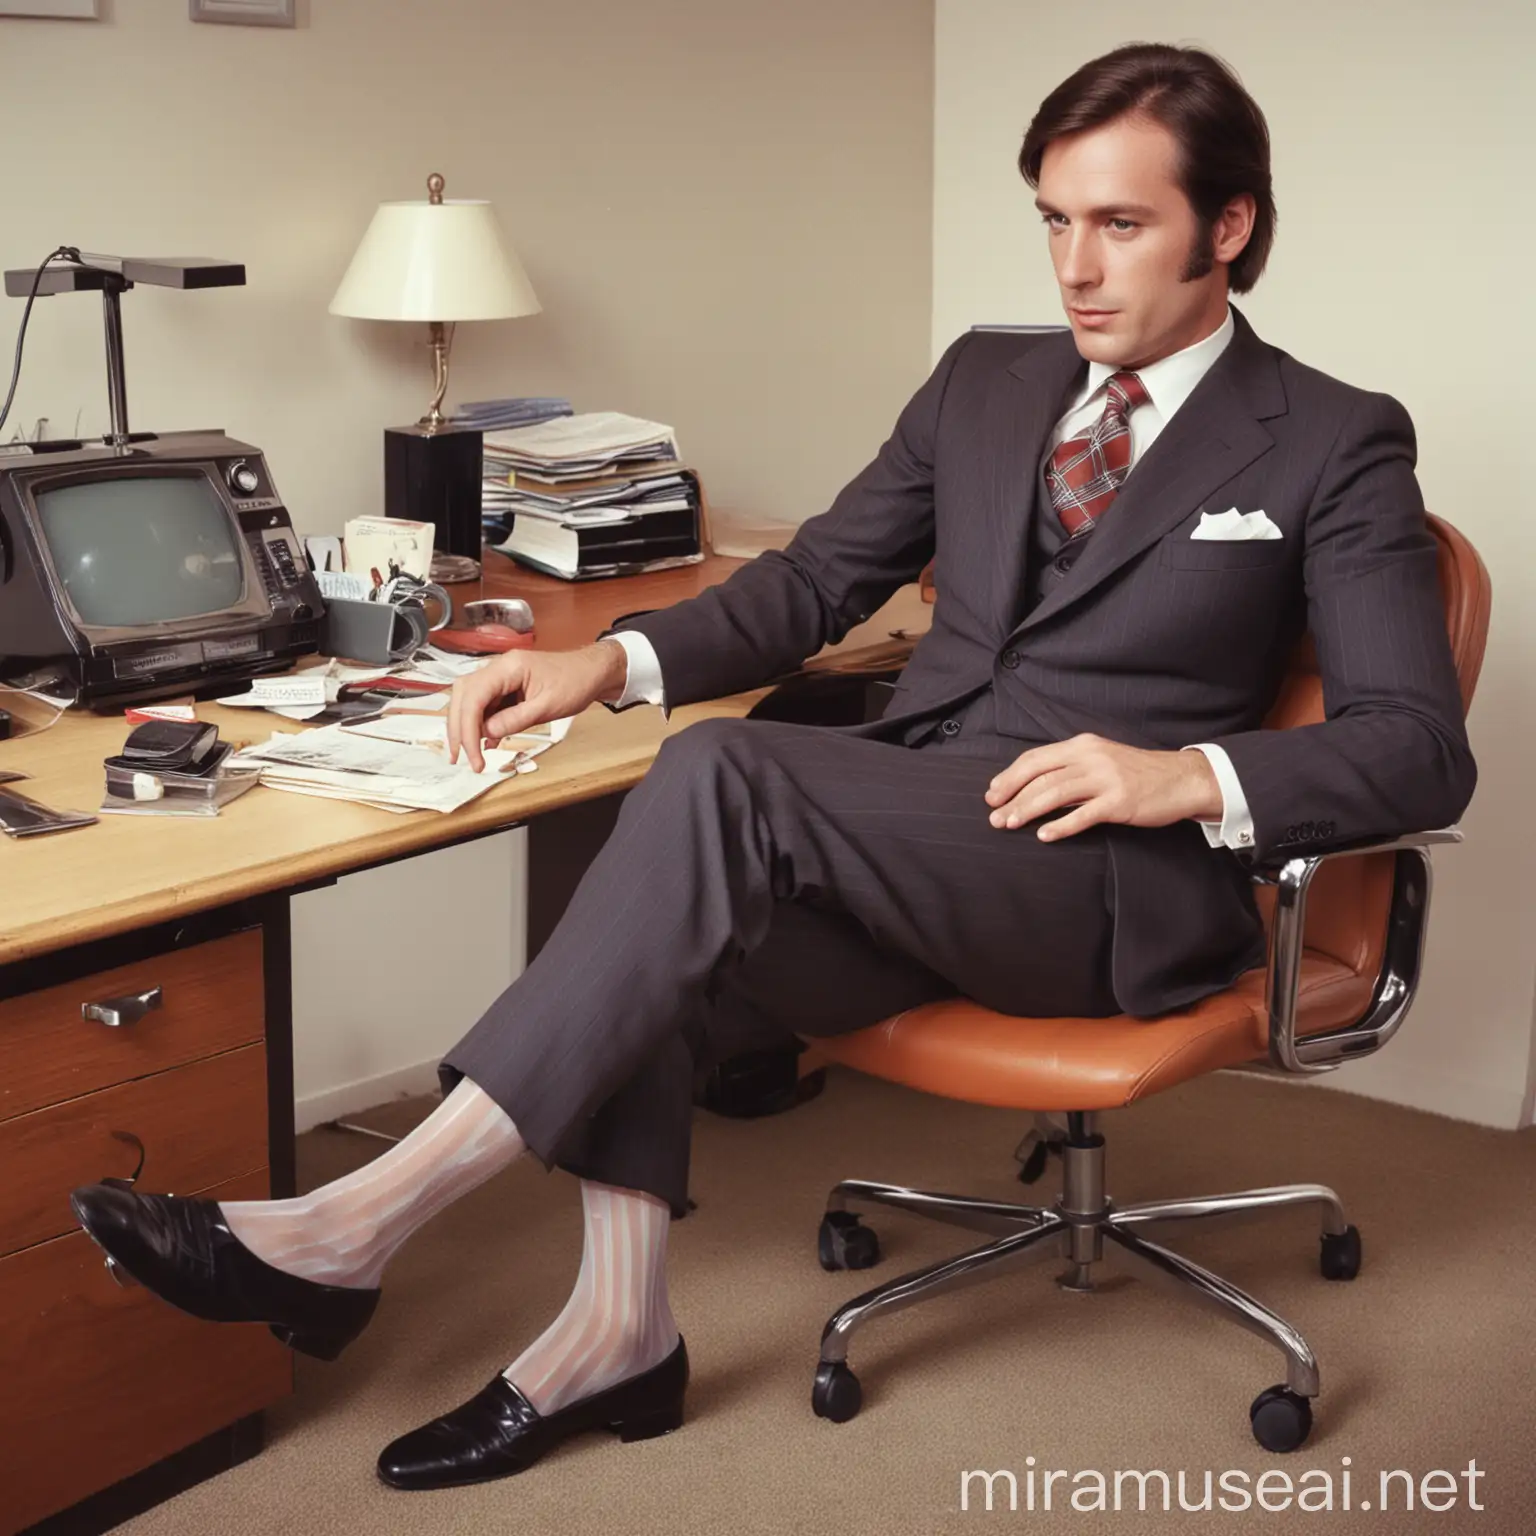 Businessman Admiring Sheer Socks at Office Desk